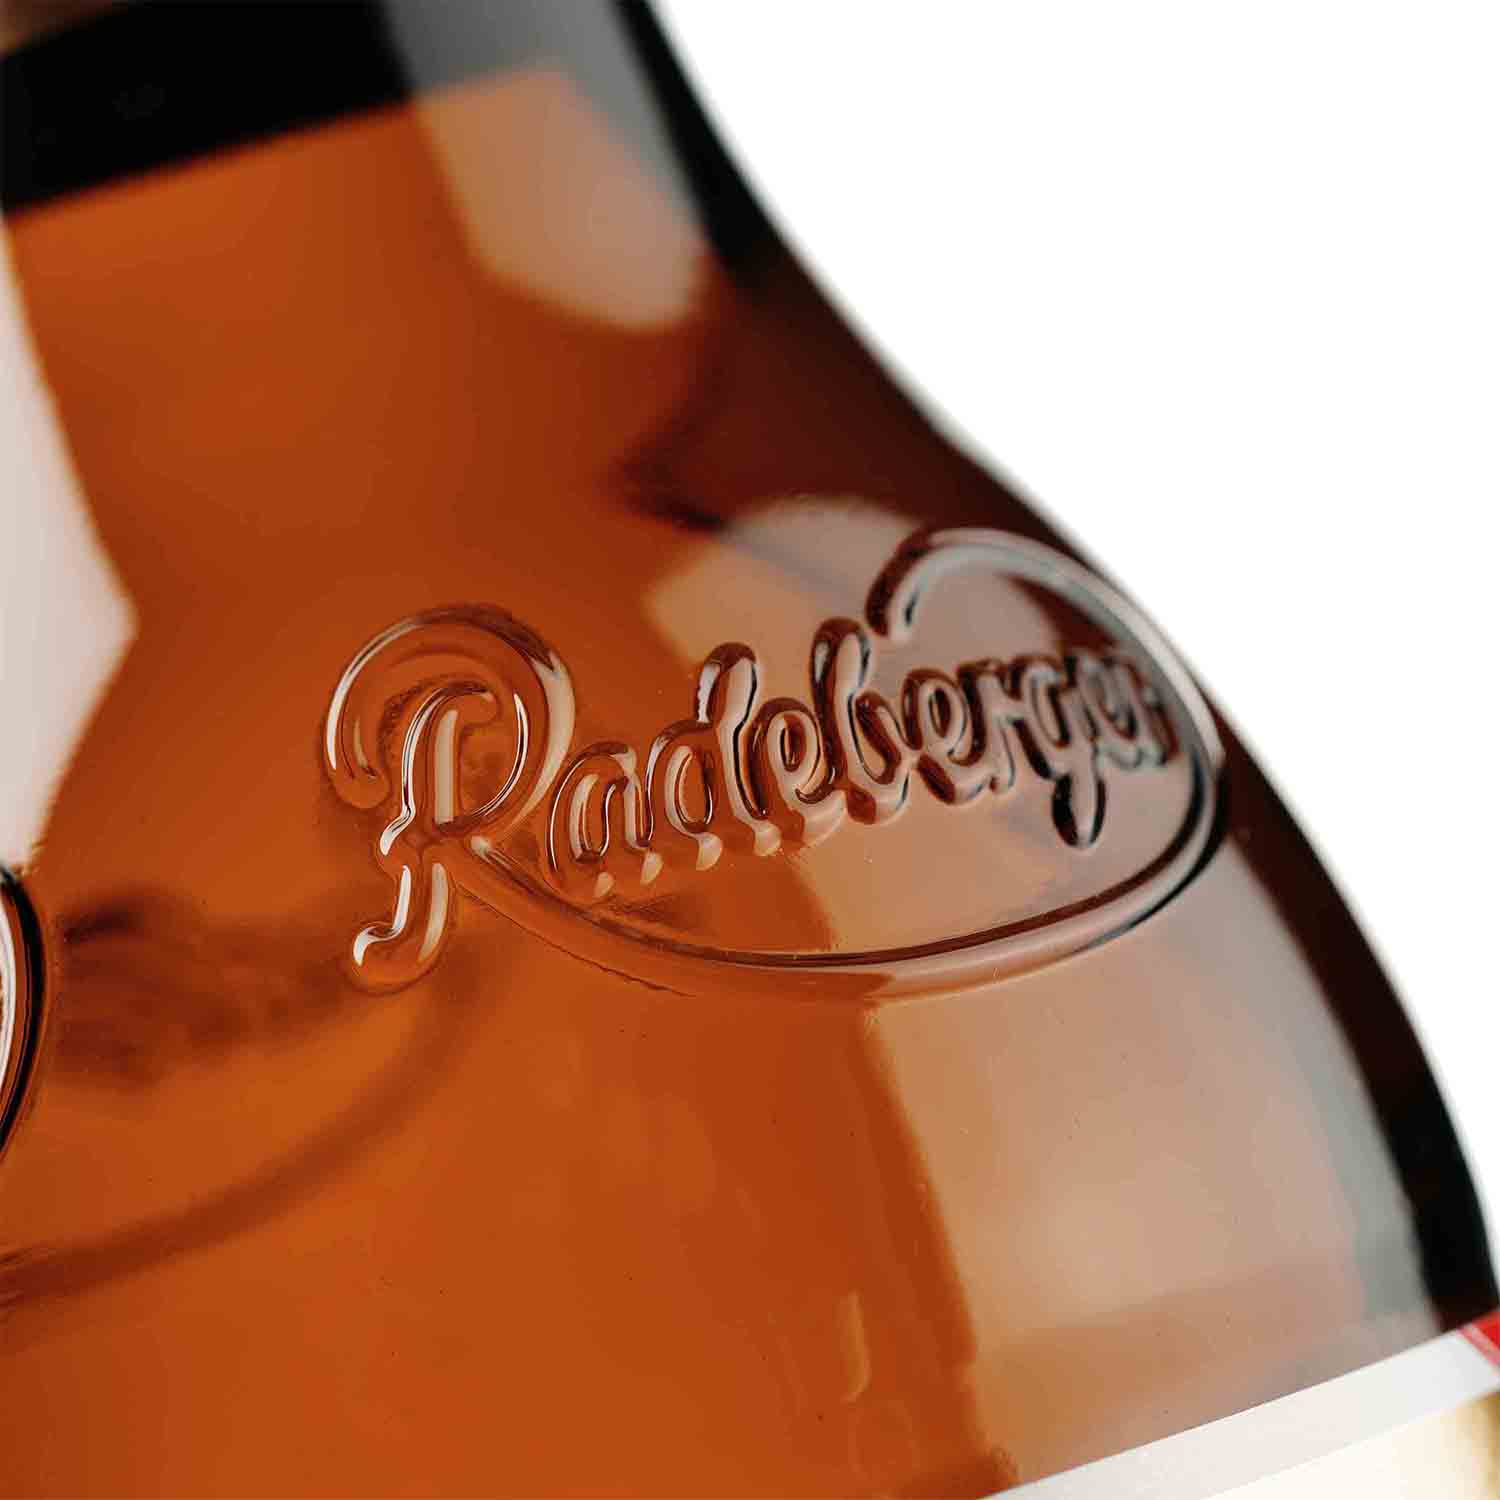 Пиво Radeberger Pilsner светлое, 4.8%, 0.5 л - фото 4